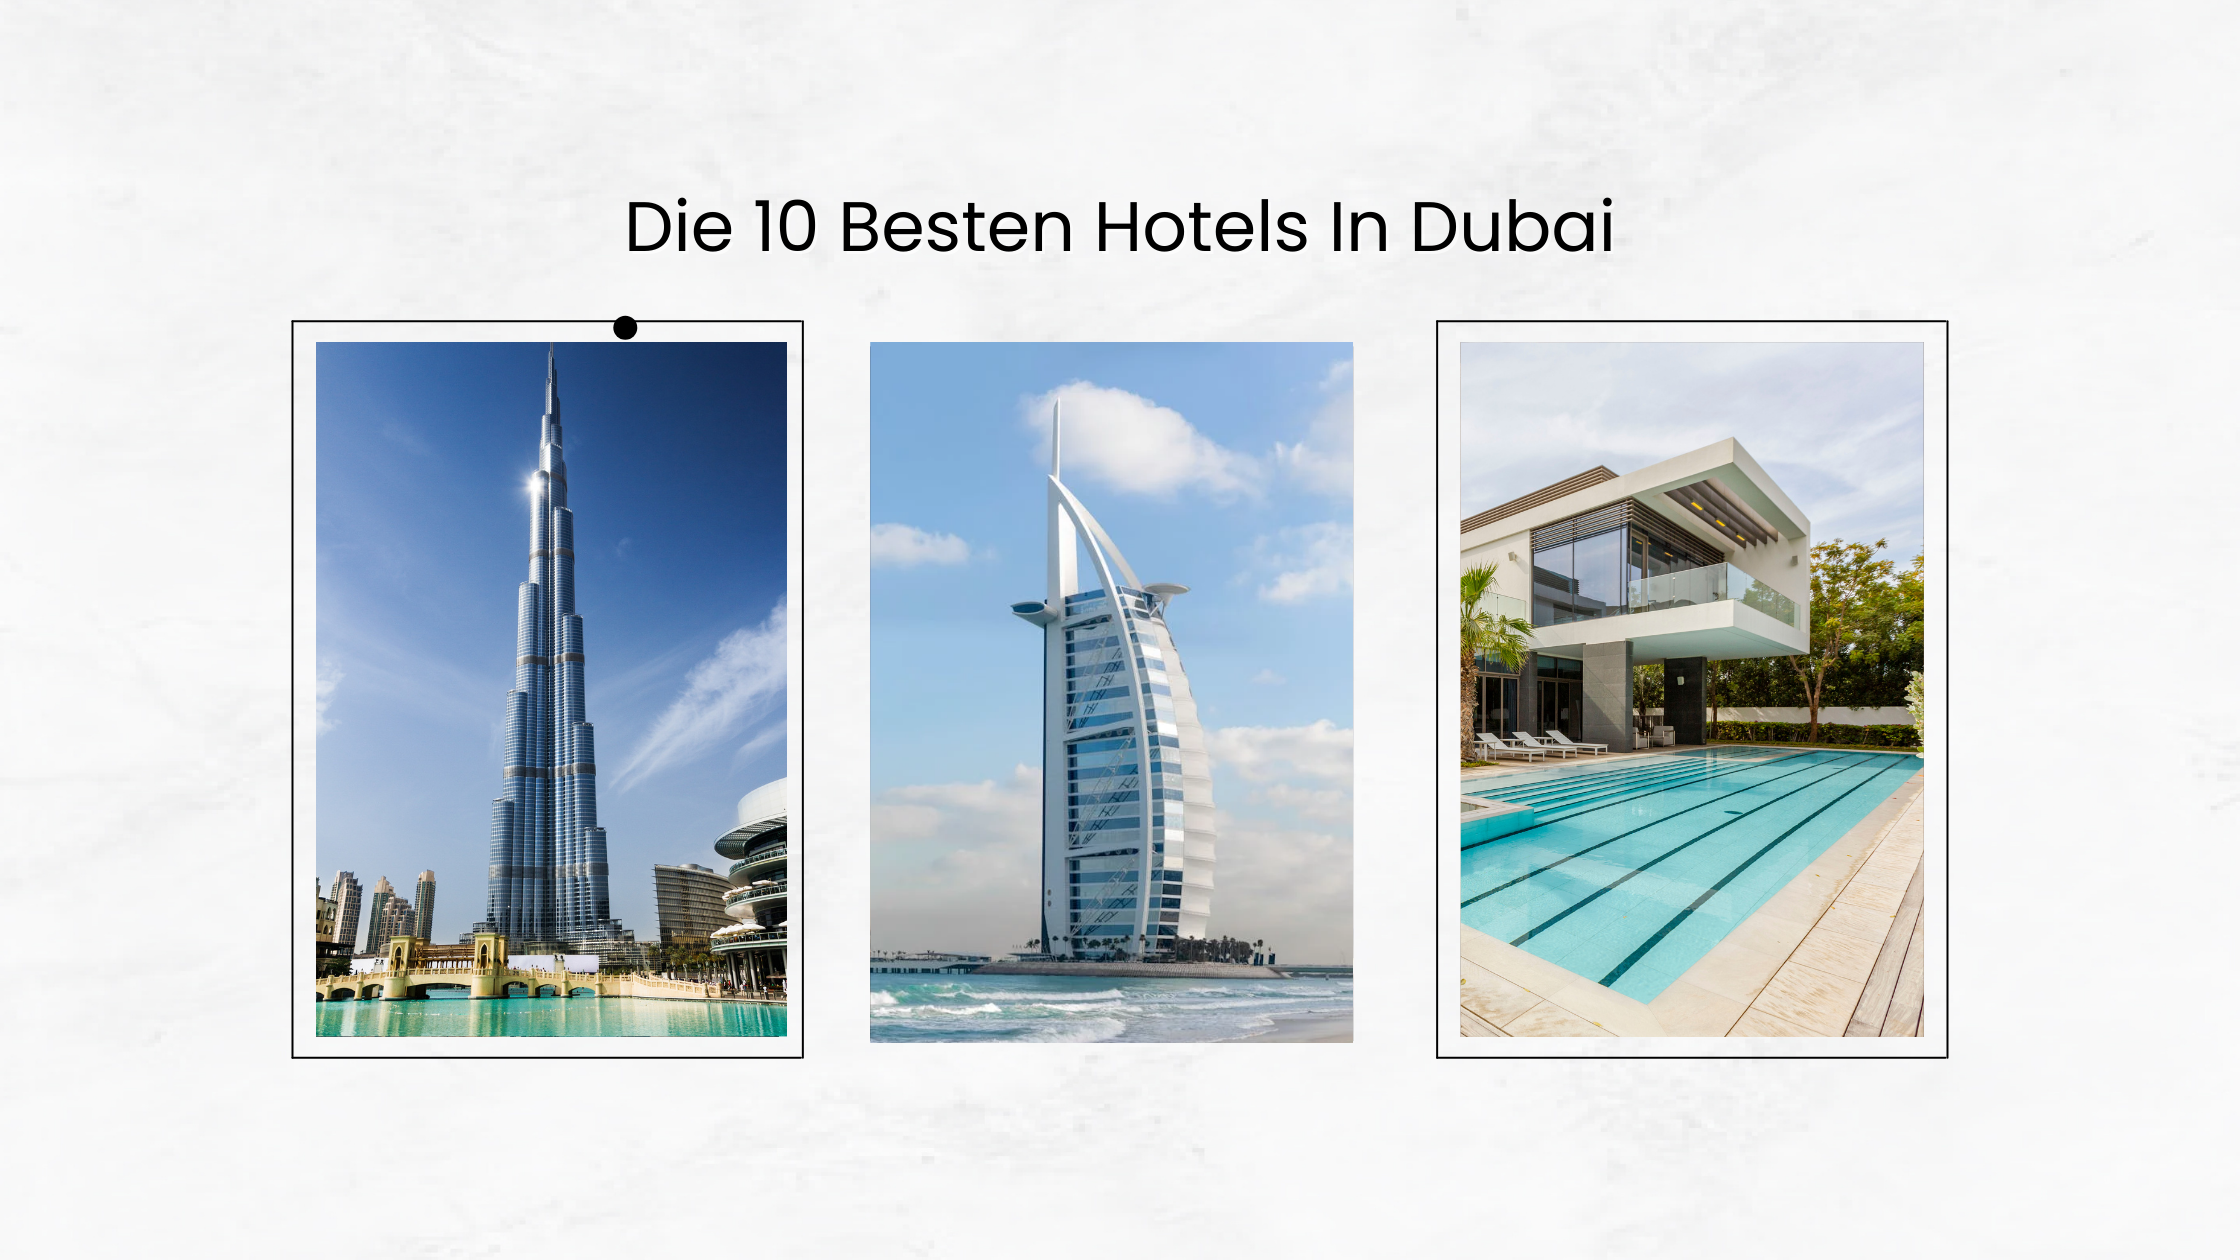 Die 10 Besten Hotels In Dubai